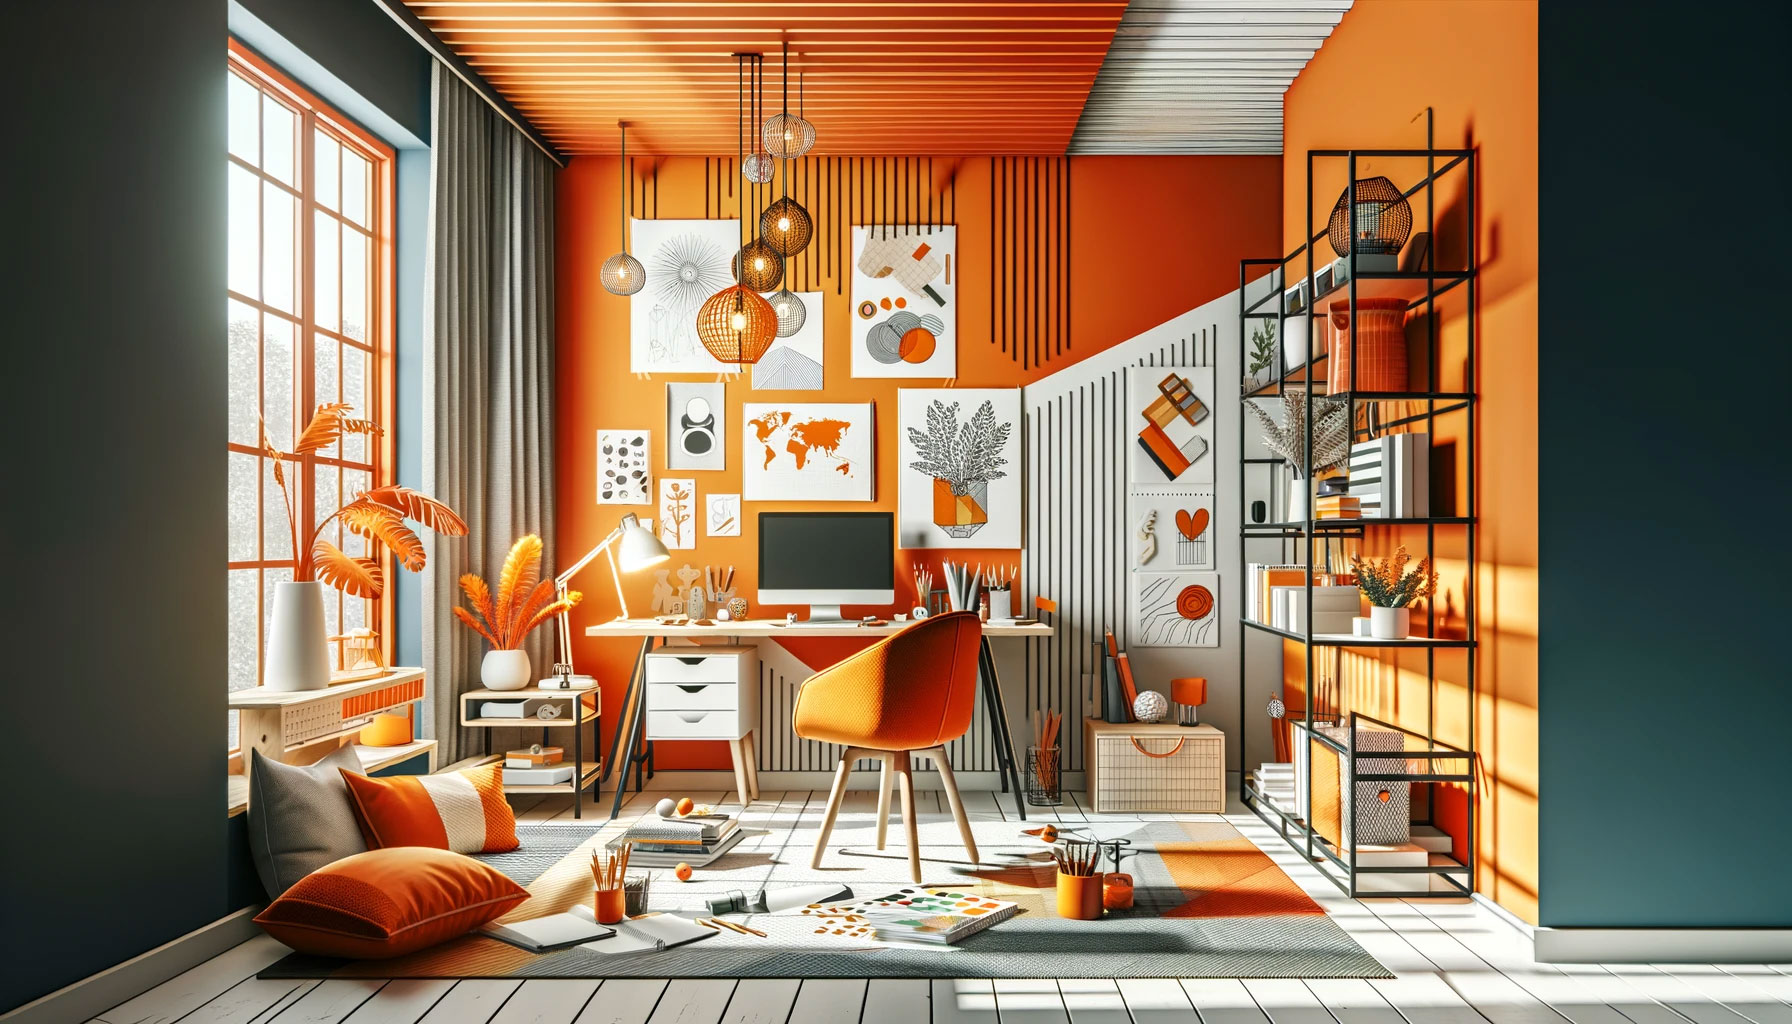 The Colour Psychology of Orange in Interior Design